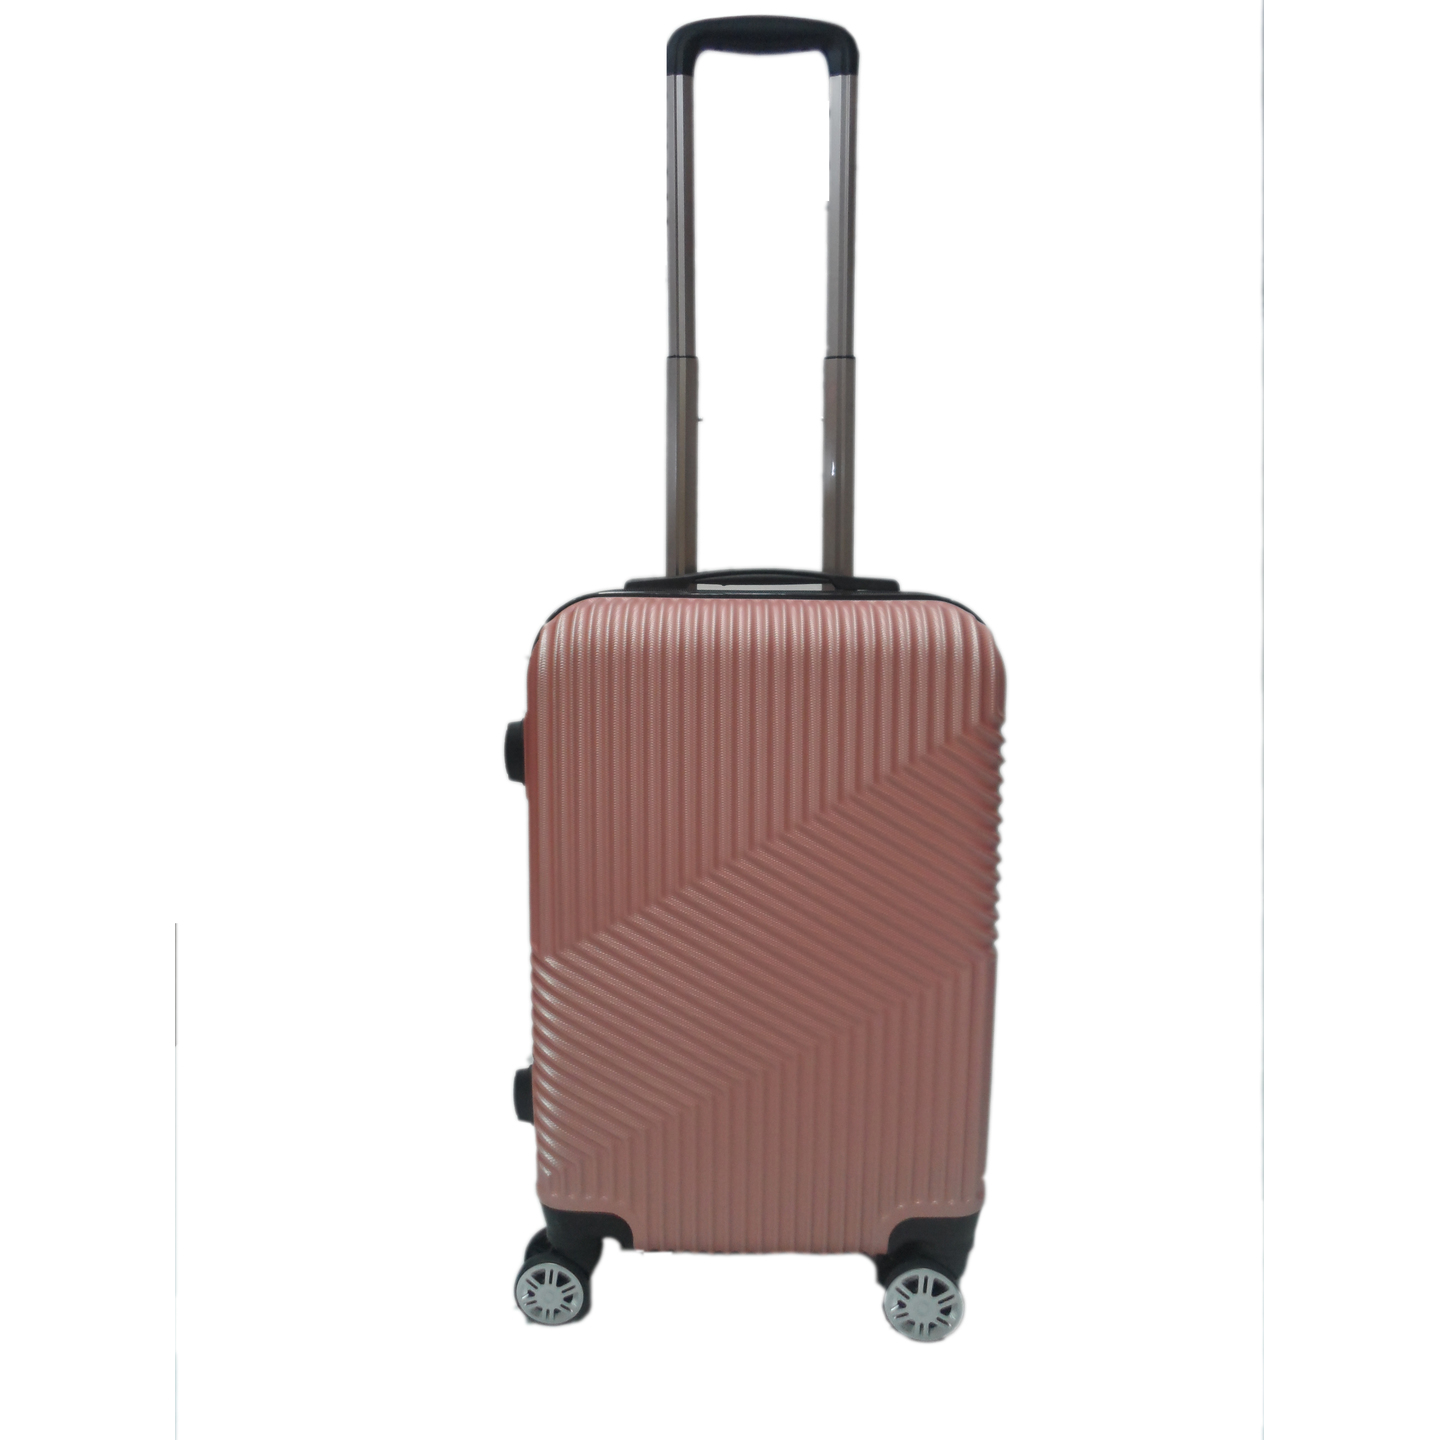 RV-51 Elegant Hard Box Luggage - Rose Gold  20 inch